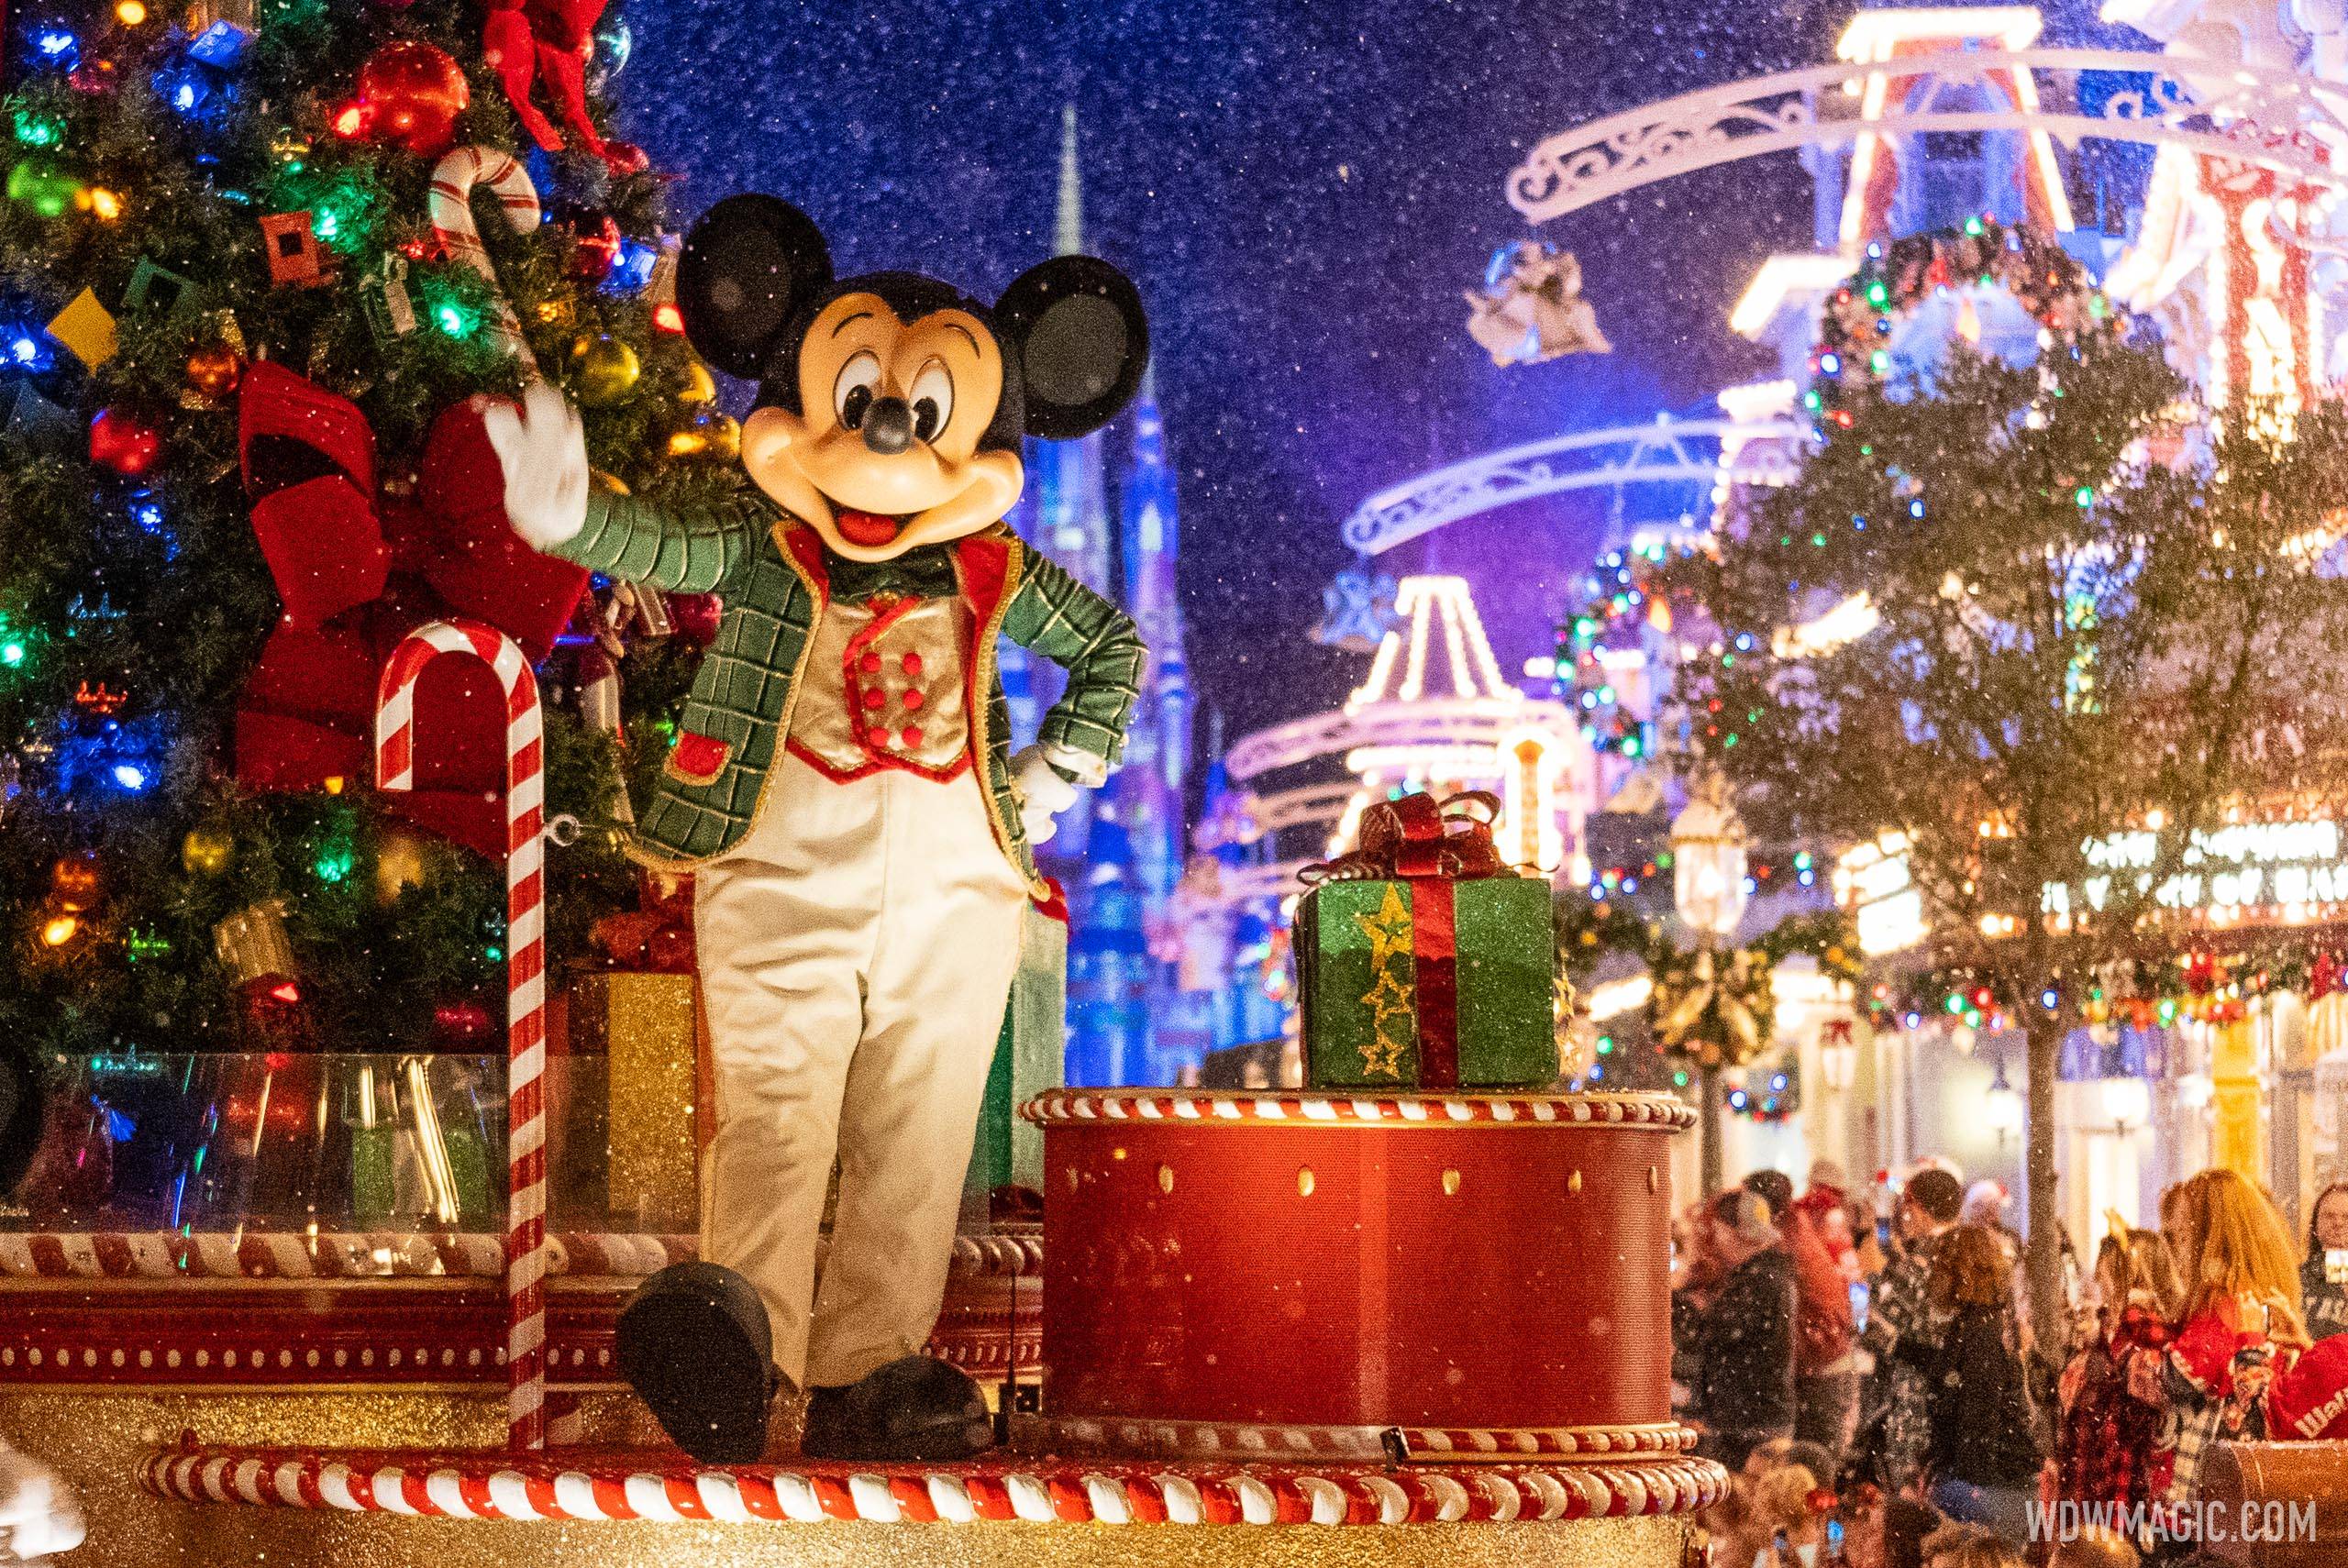 Holiday entertainment schedule at Magic Kingdom during Disney World's Christmas peak week